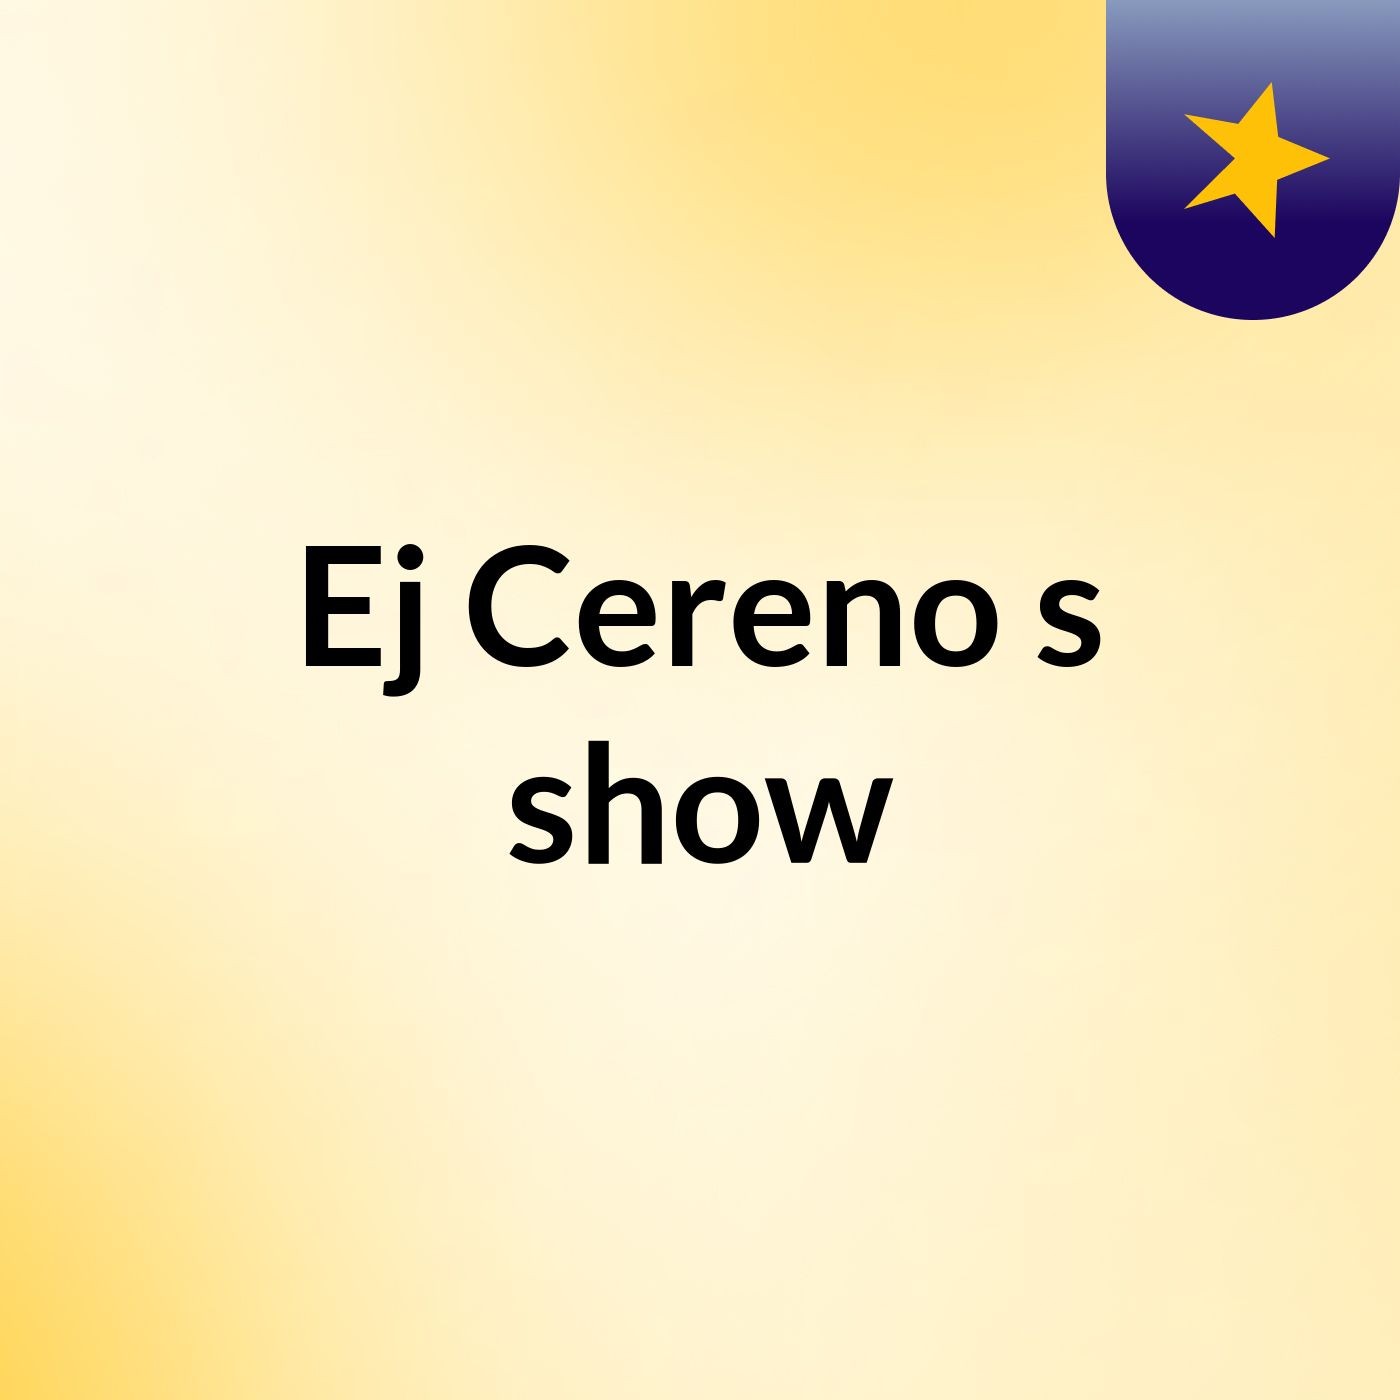 Ej Cereno's show